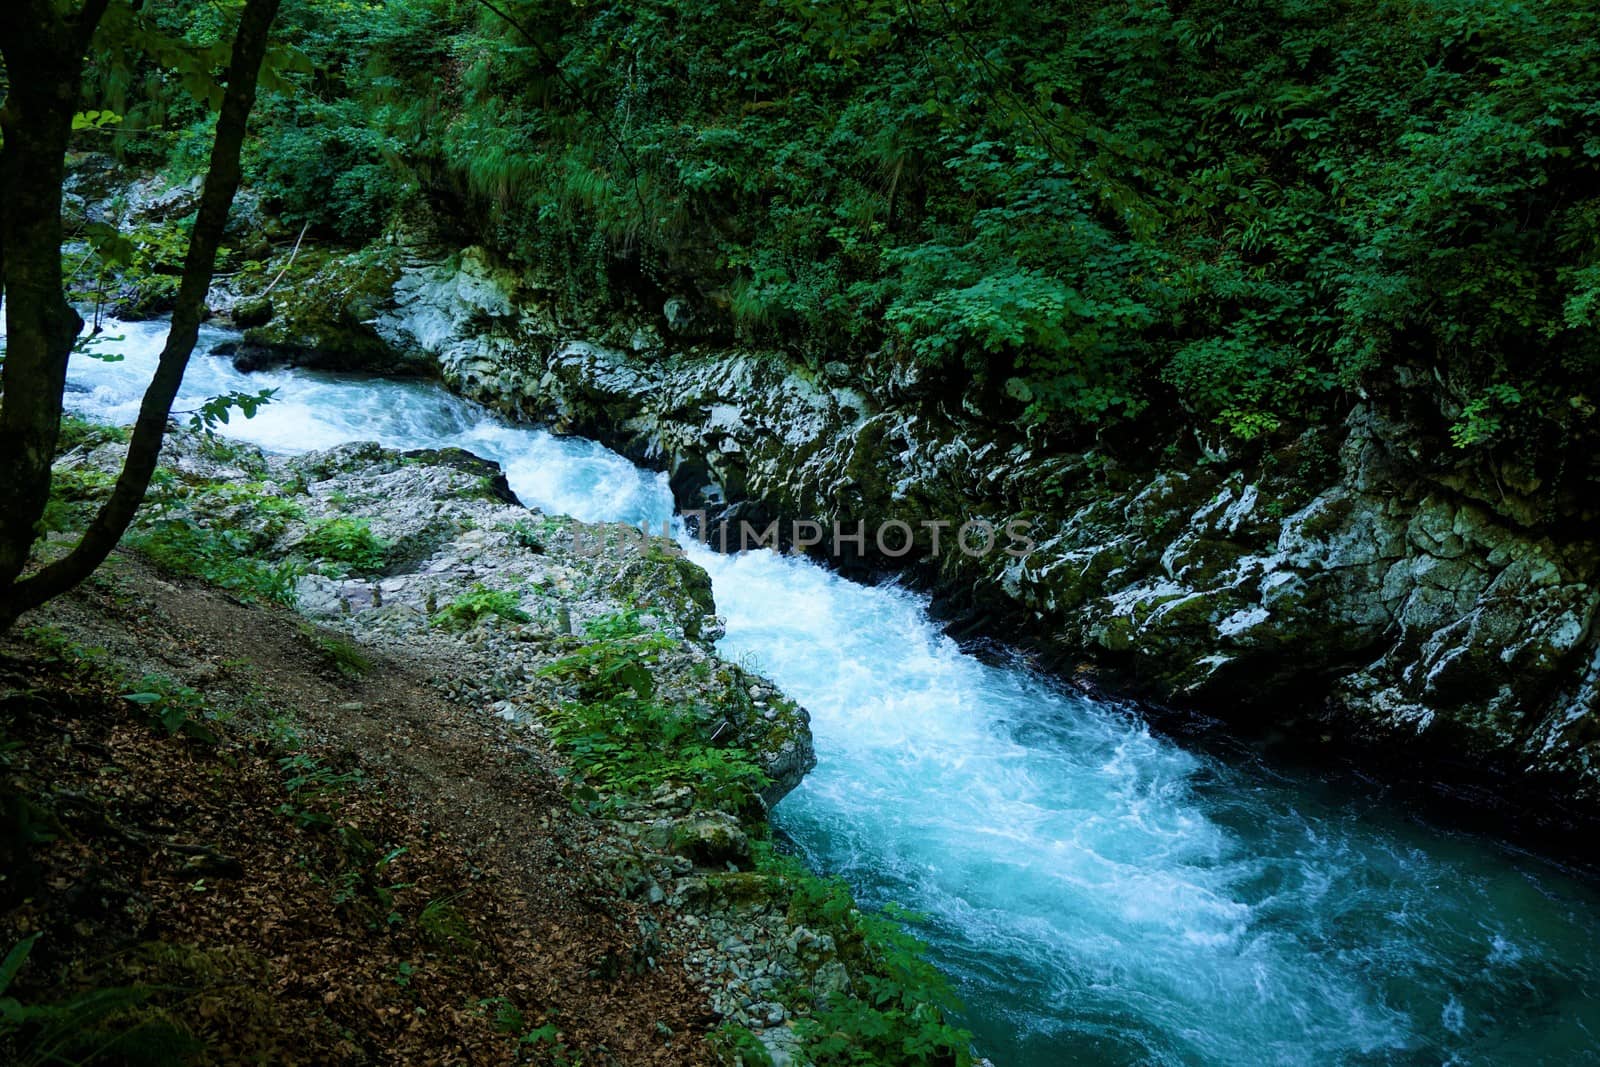 Radovna river in the Vintgar Gorge, Podhom near Bled by pisces2386